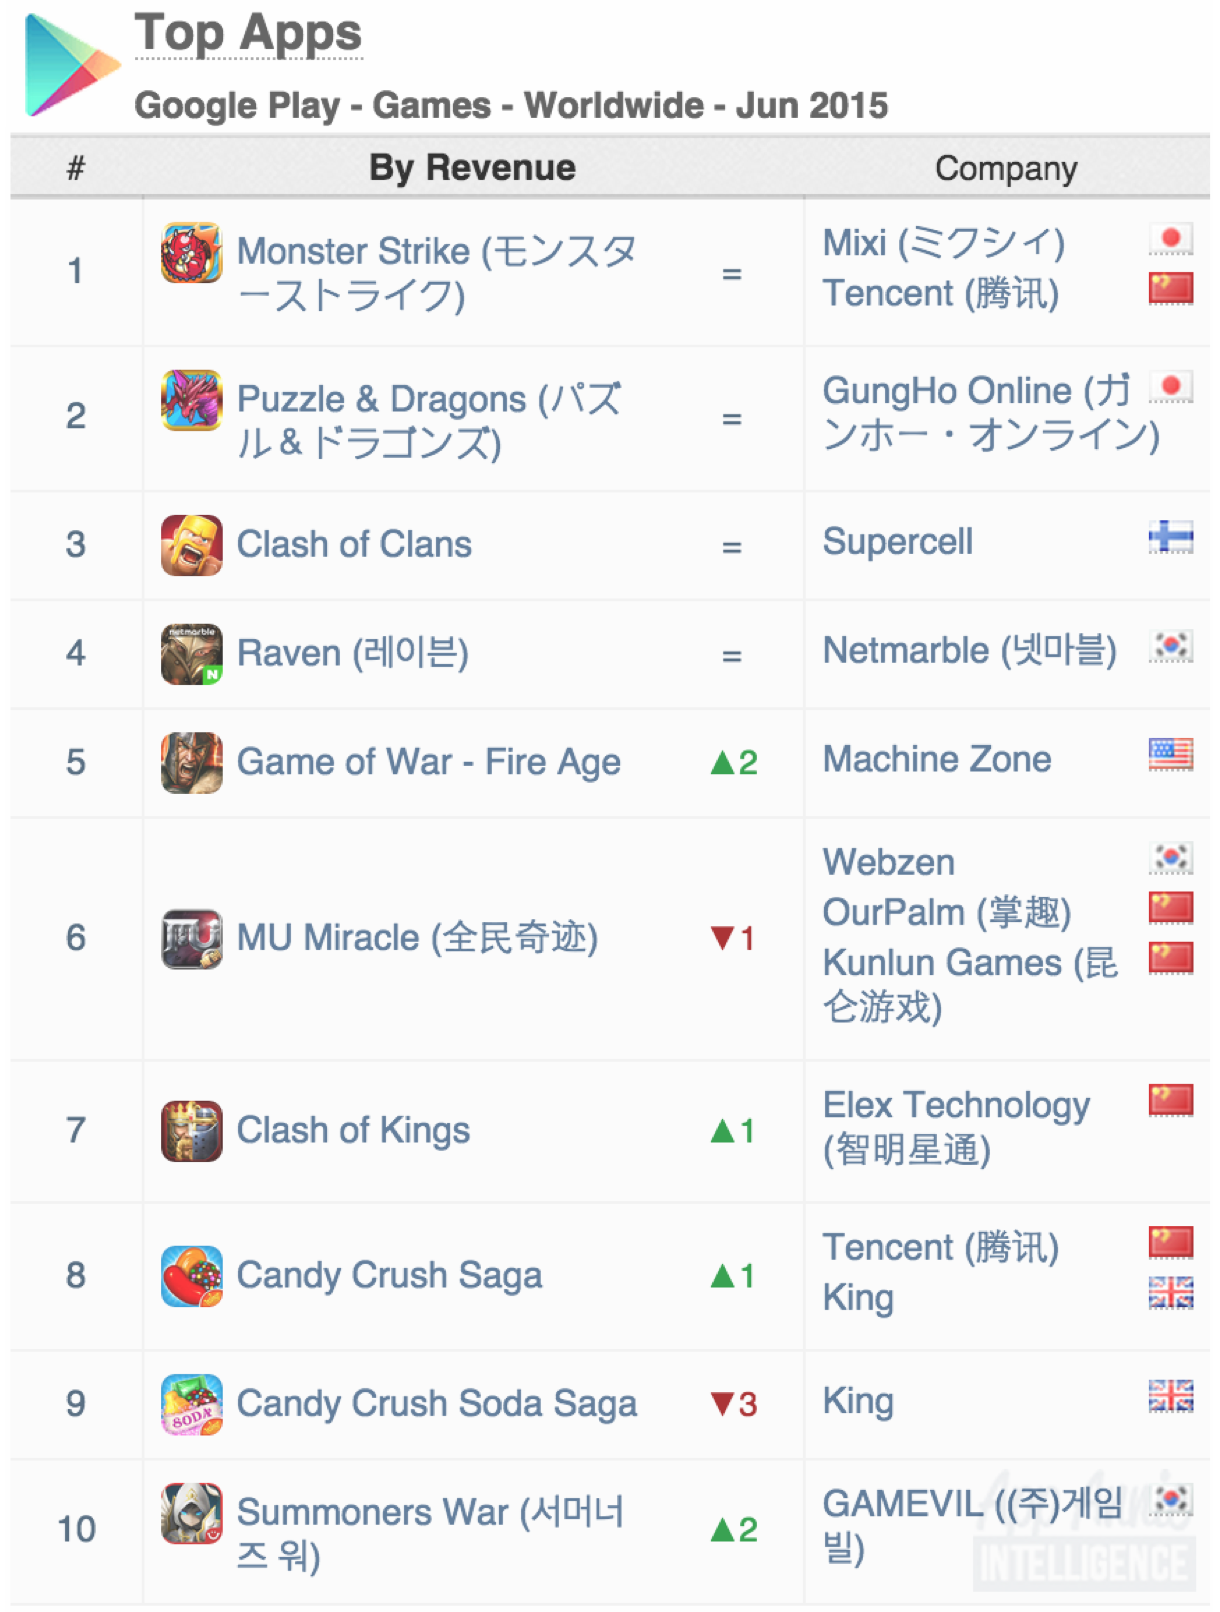 Top Apps Google Play Games Worldwide June 2015